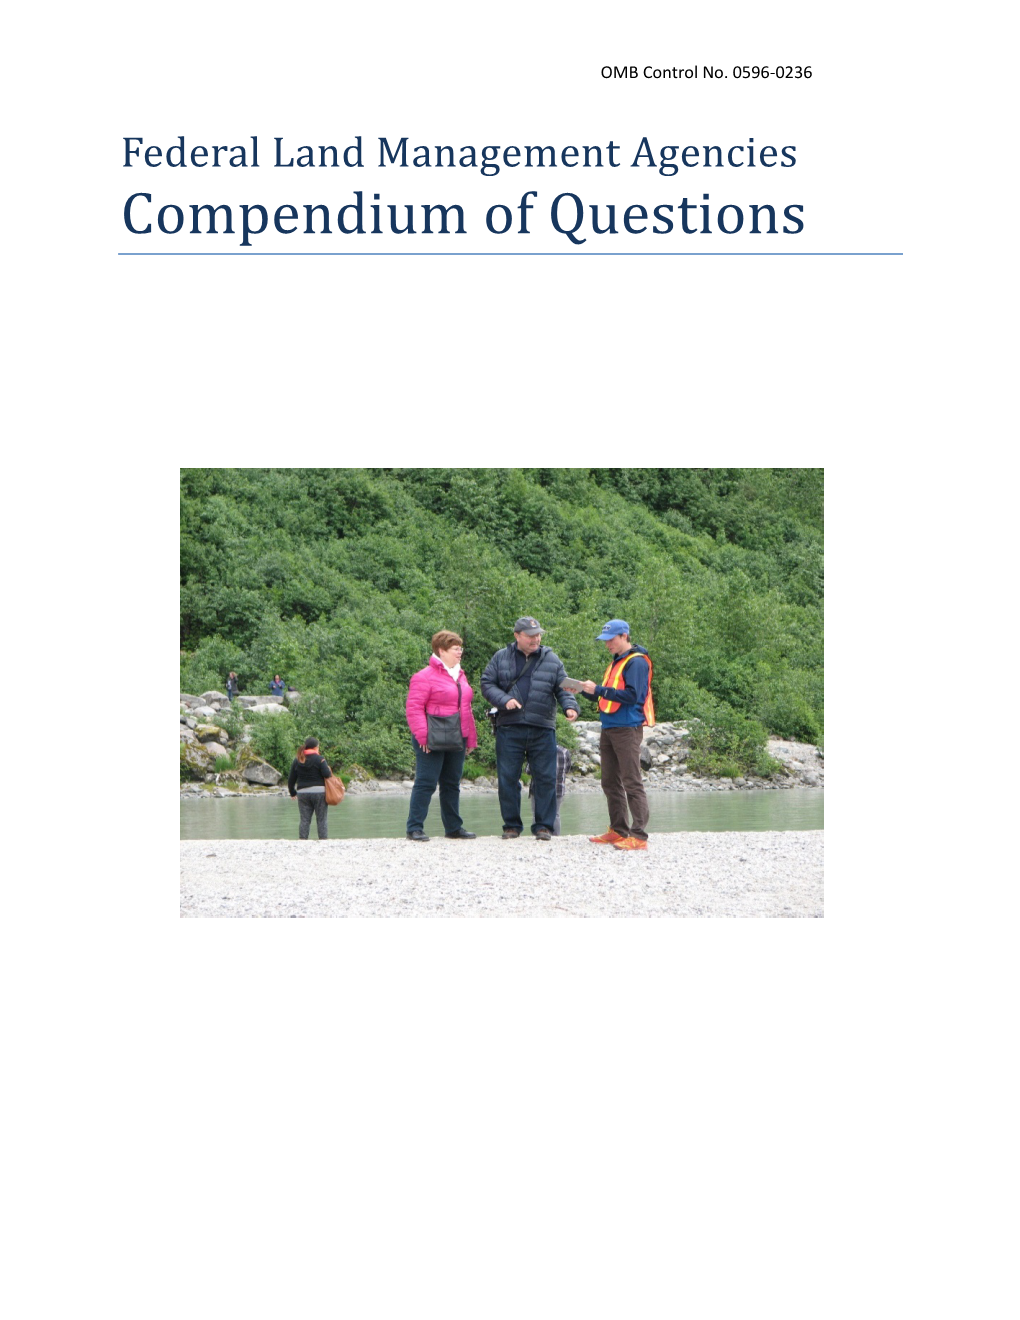 Federal Land Management Agencies' Compendium of Questions